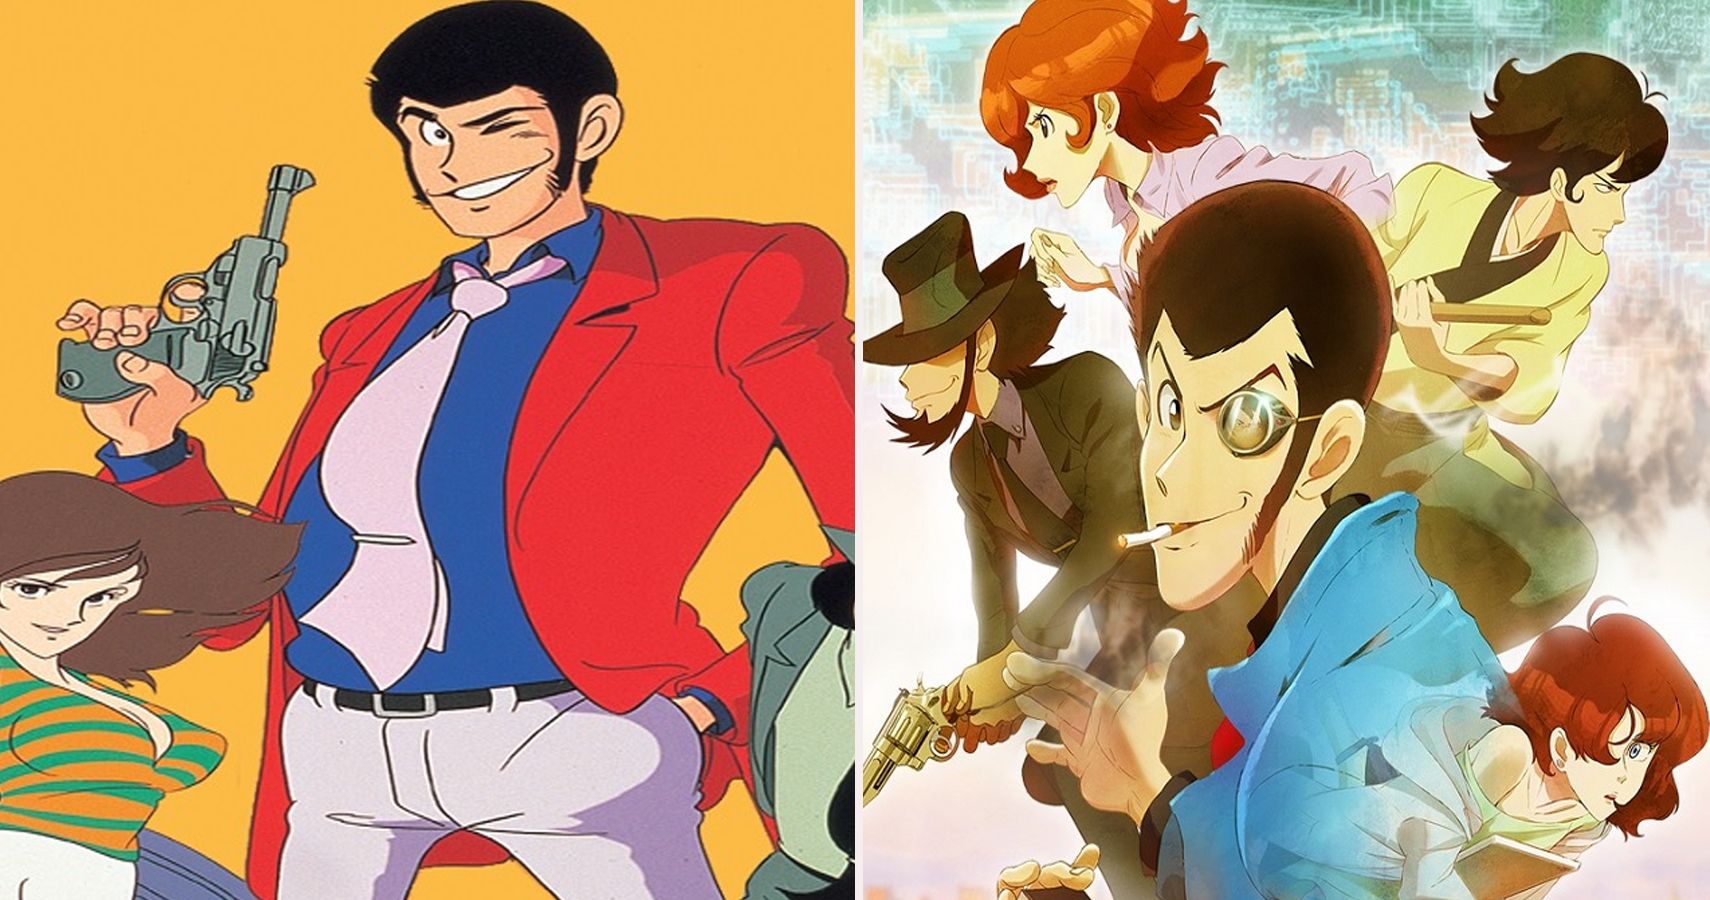 Lupin The III: Every Anime Series, Ranked According To IMDb